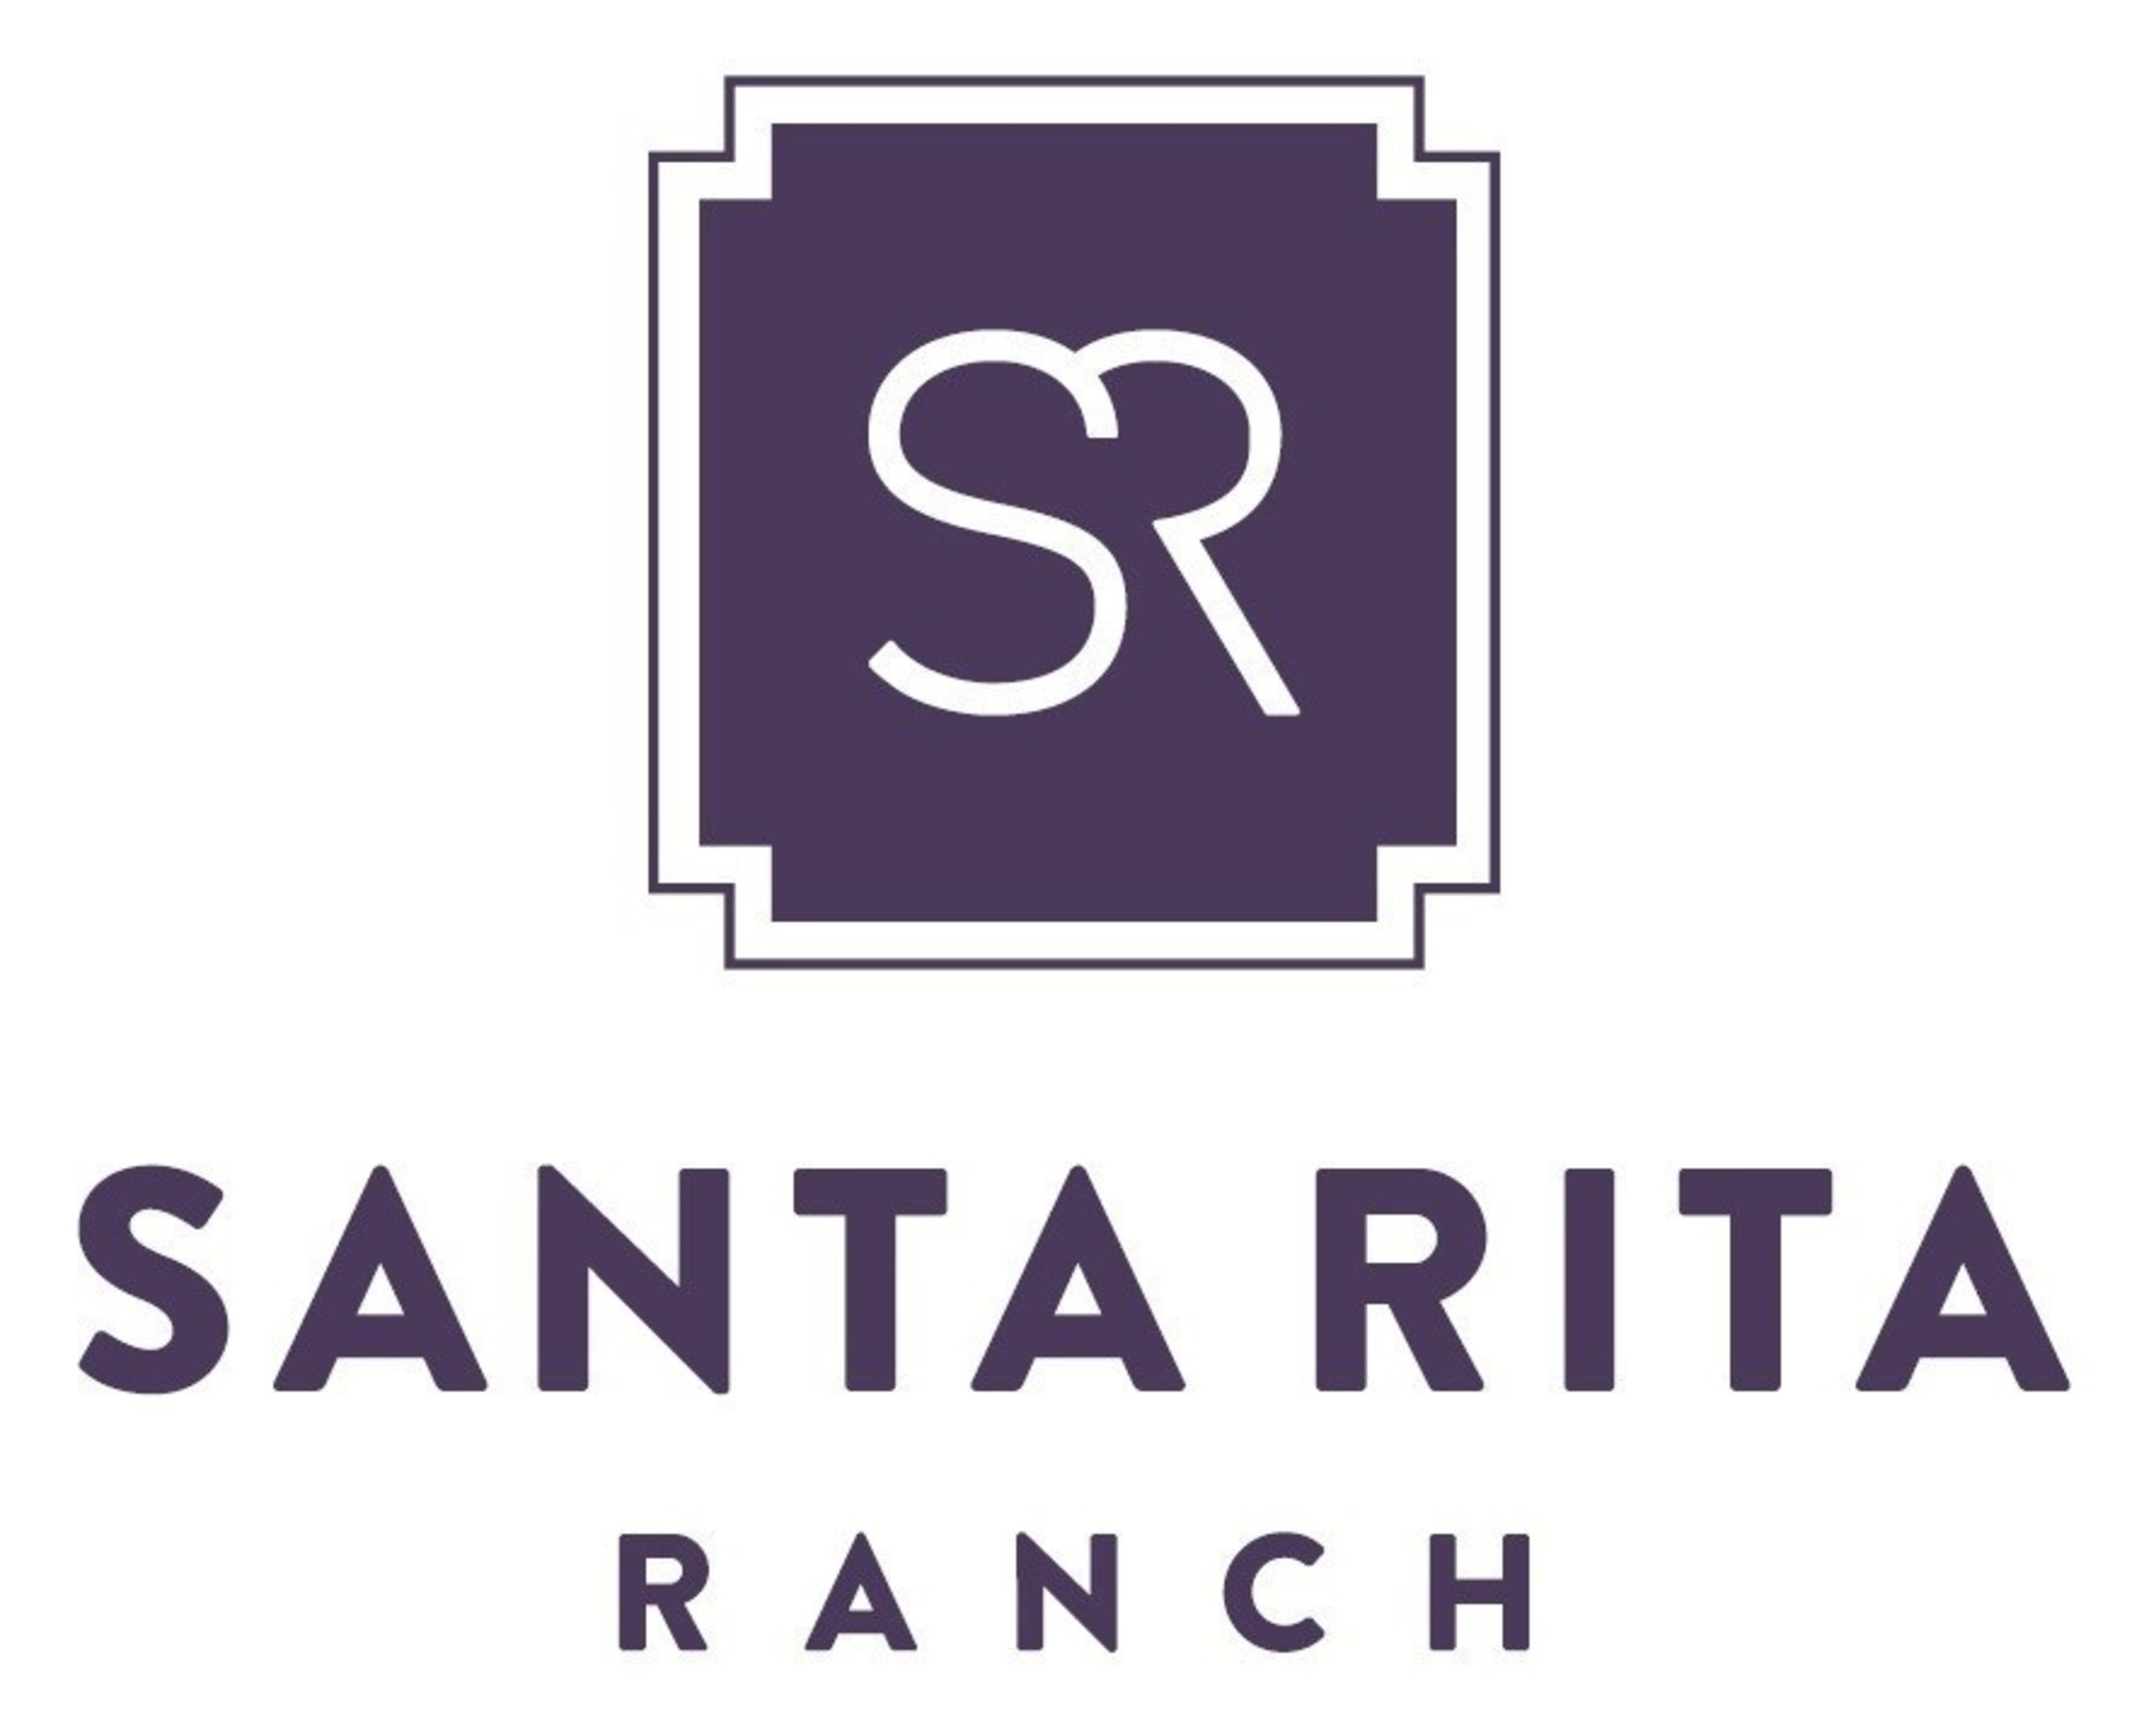 Santa Rita Ranch is a Master-Planned community Northwest of Austin.